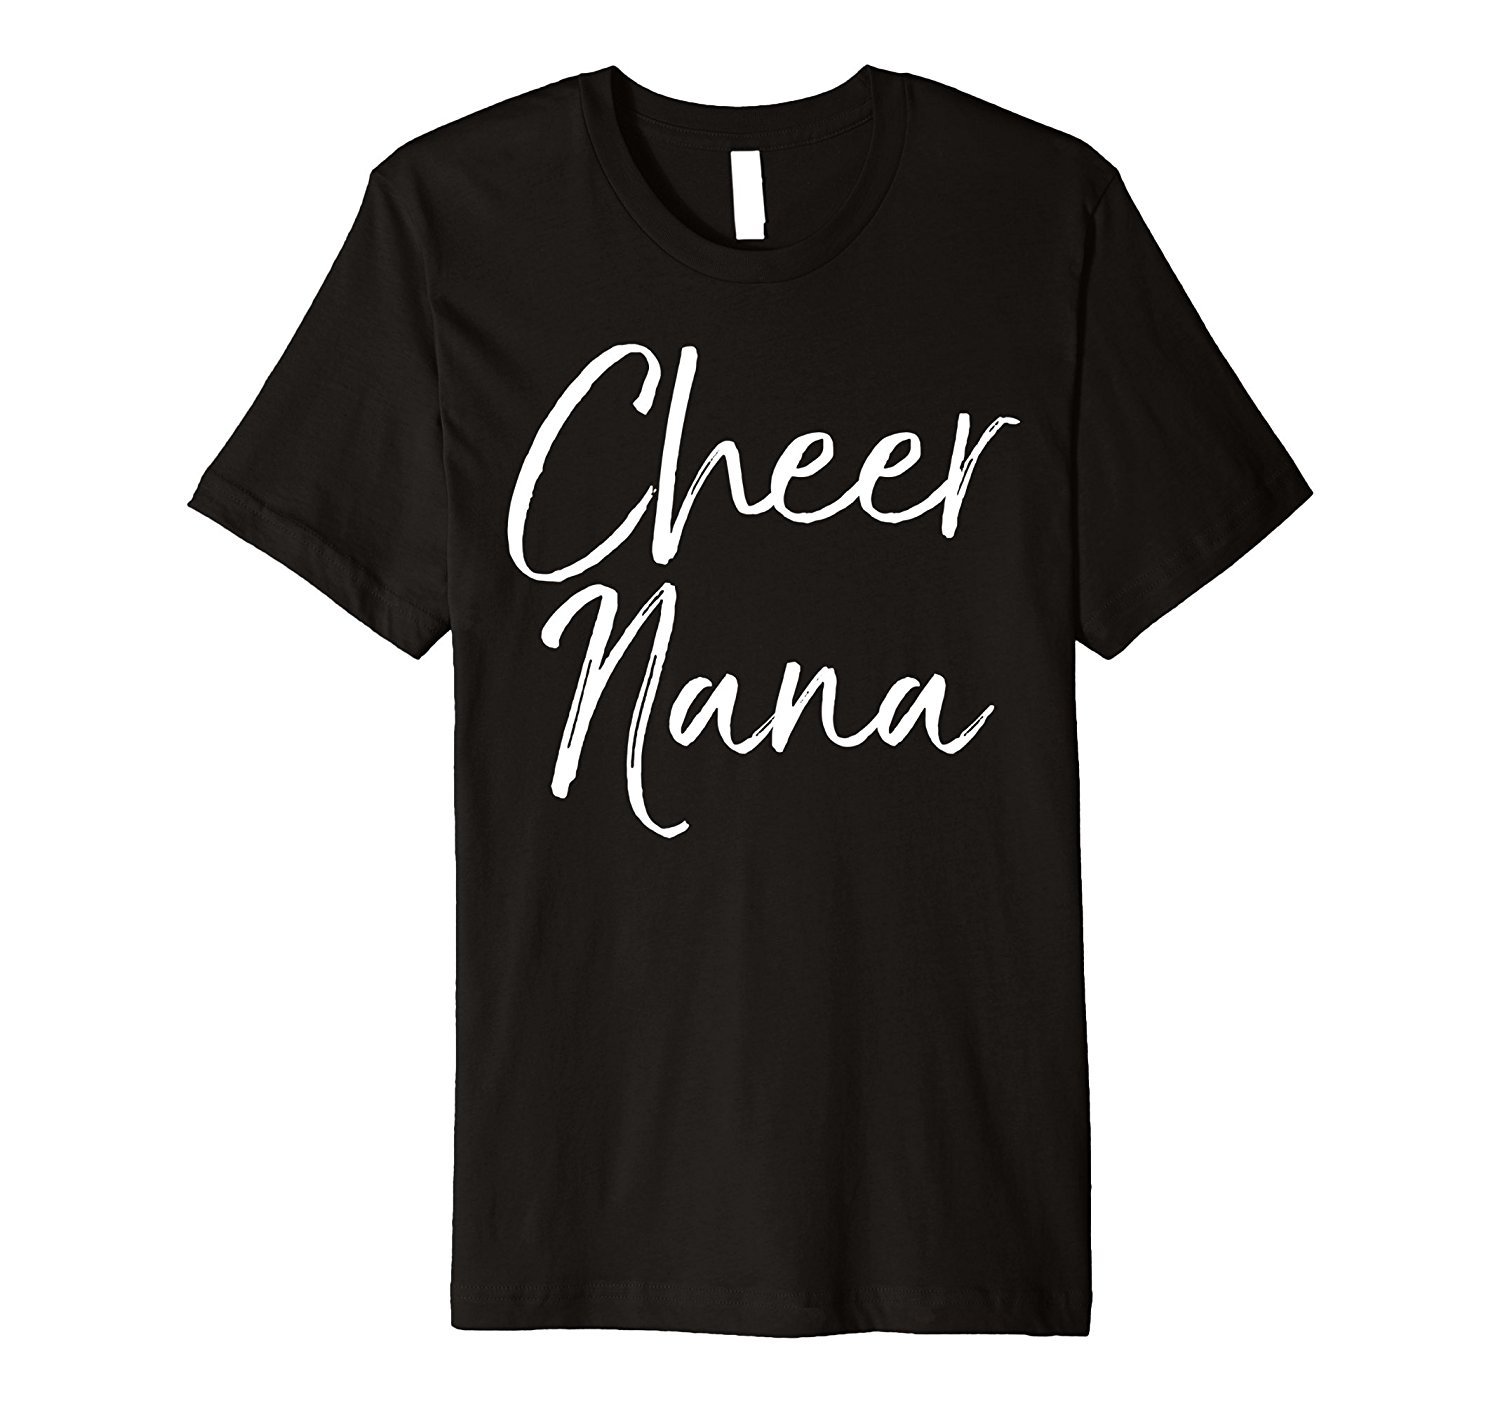 Cheer Nana Shirt